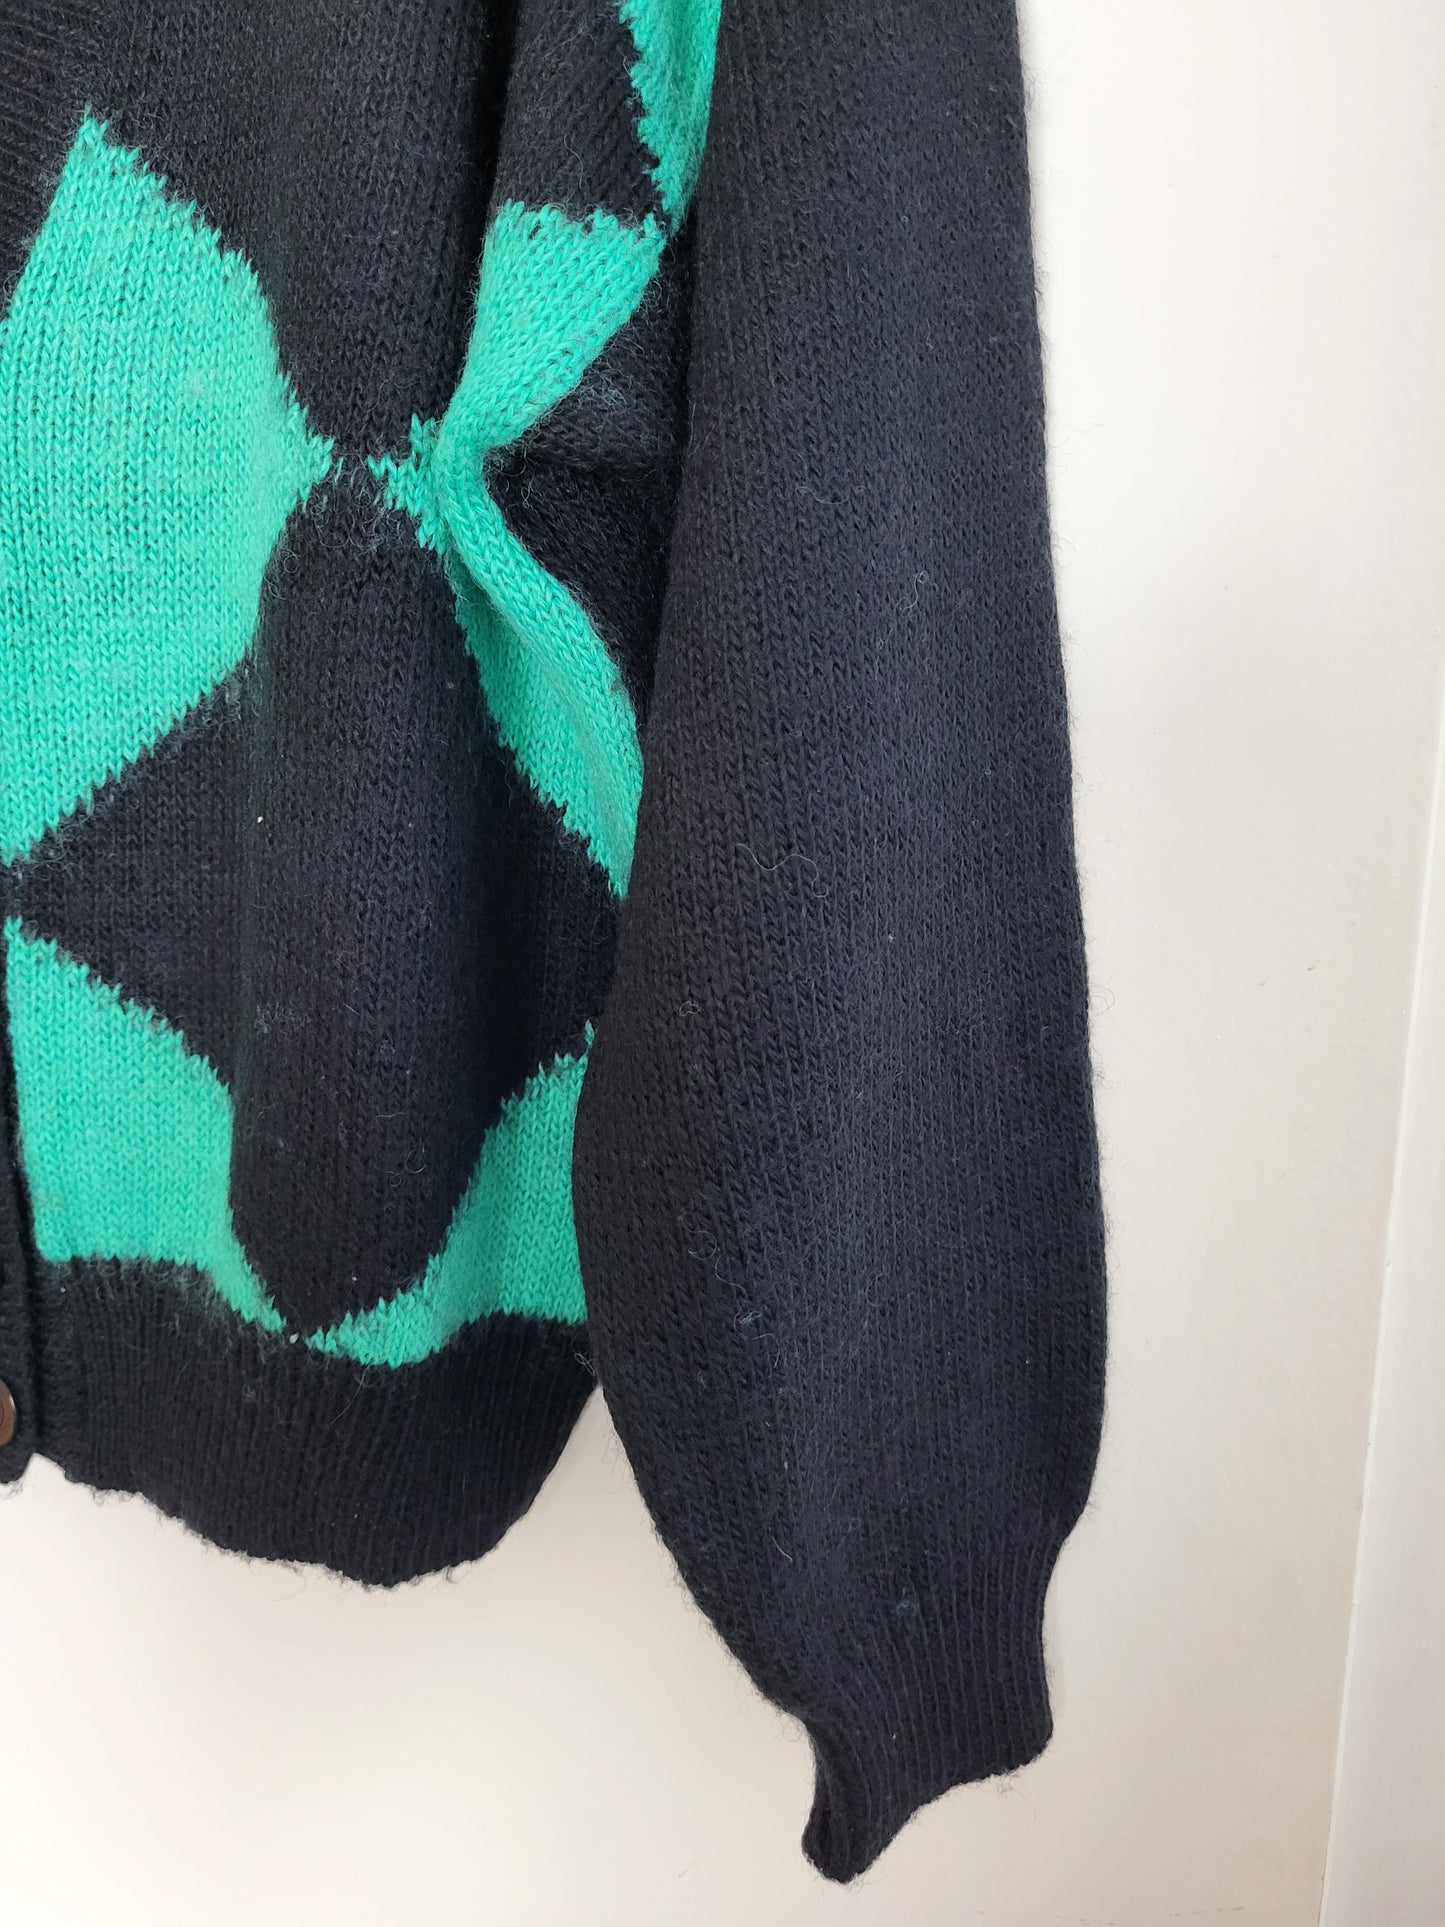 Vintage - Pullover/Cardigan - Muster - Vintage Wolle - Bunt - Damen - L/XL